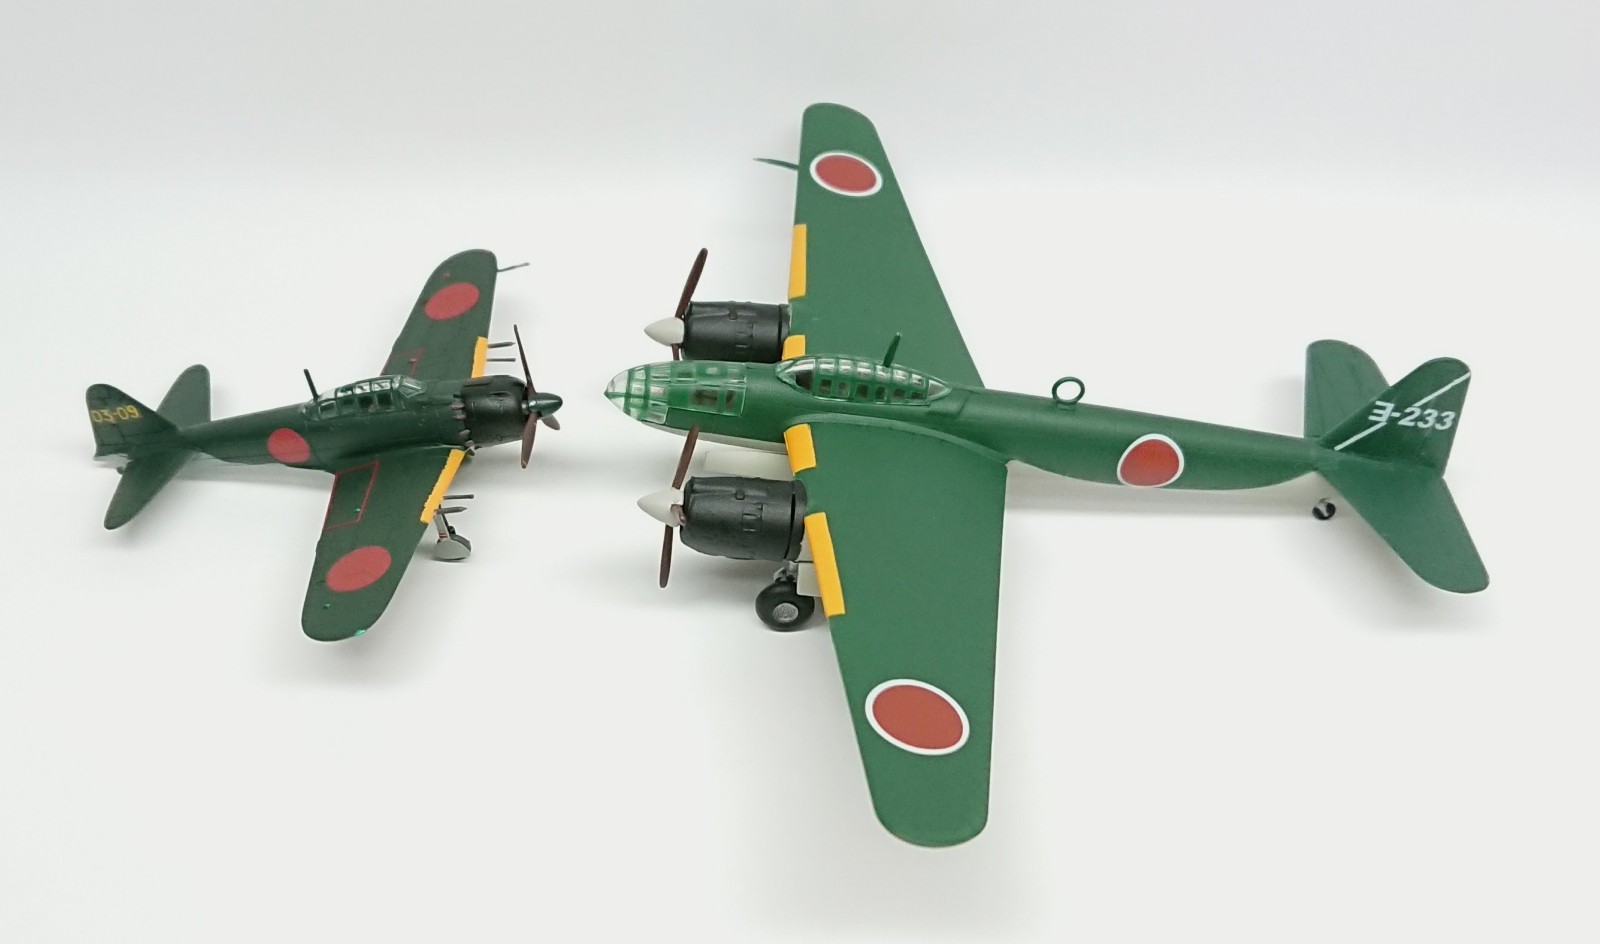 F-toys 1/144 双発機コレクション3 日本軍爆撃機「銀河11型」 製作 